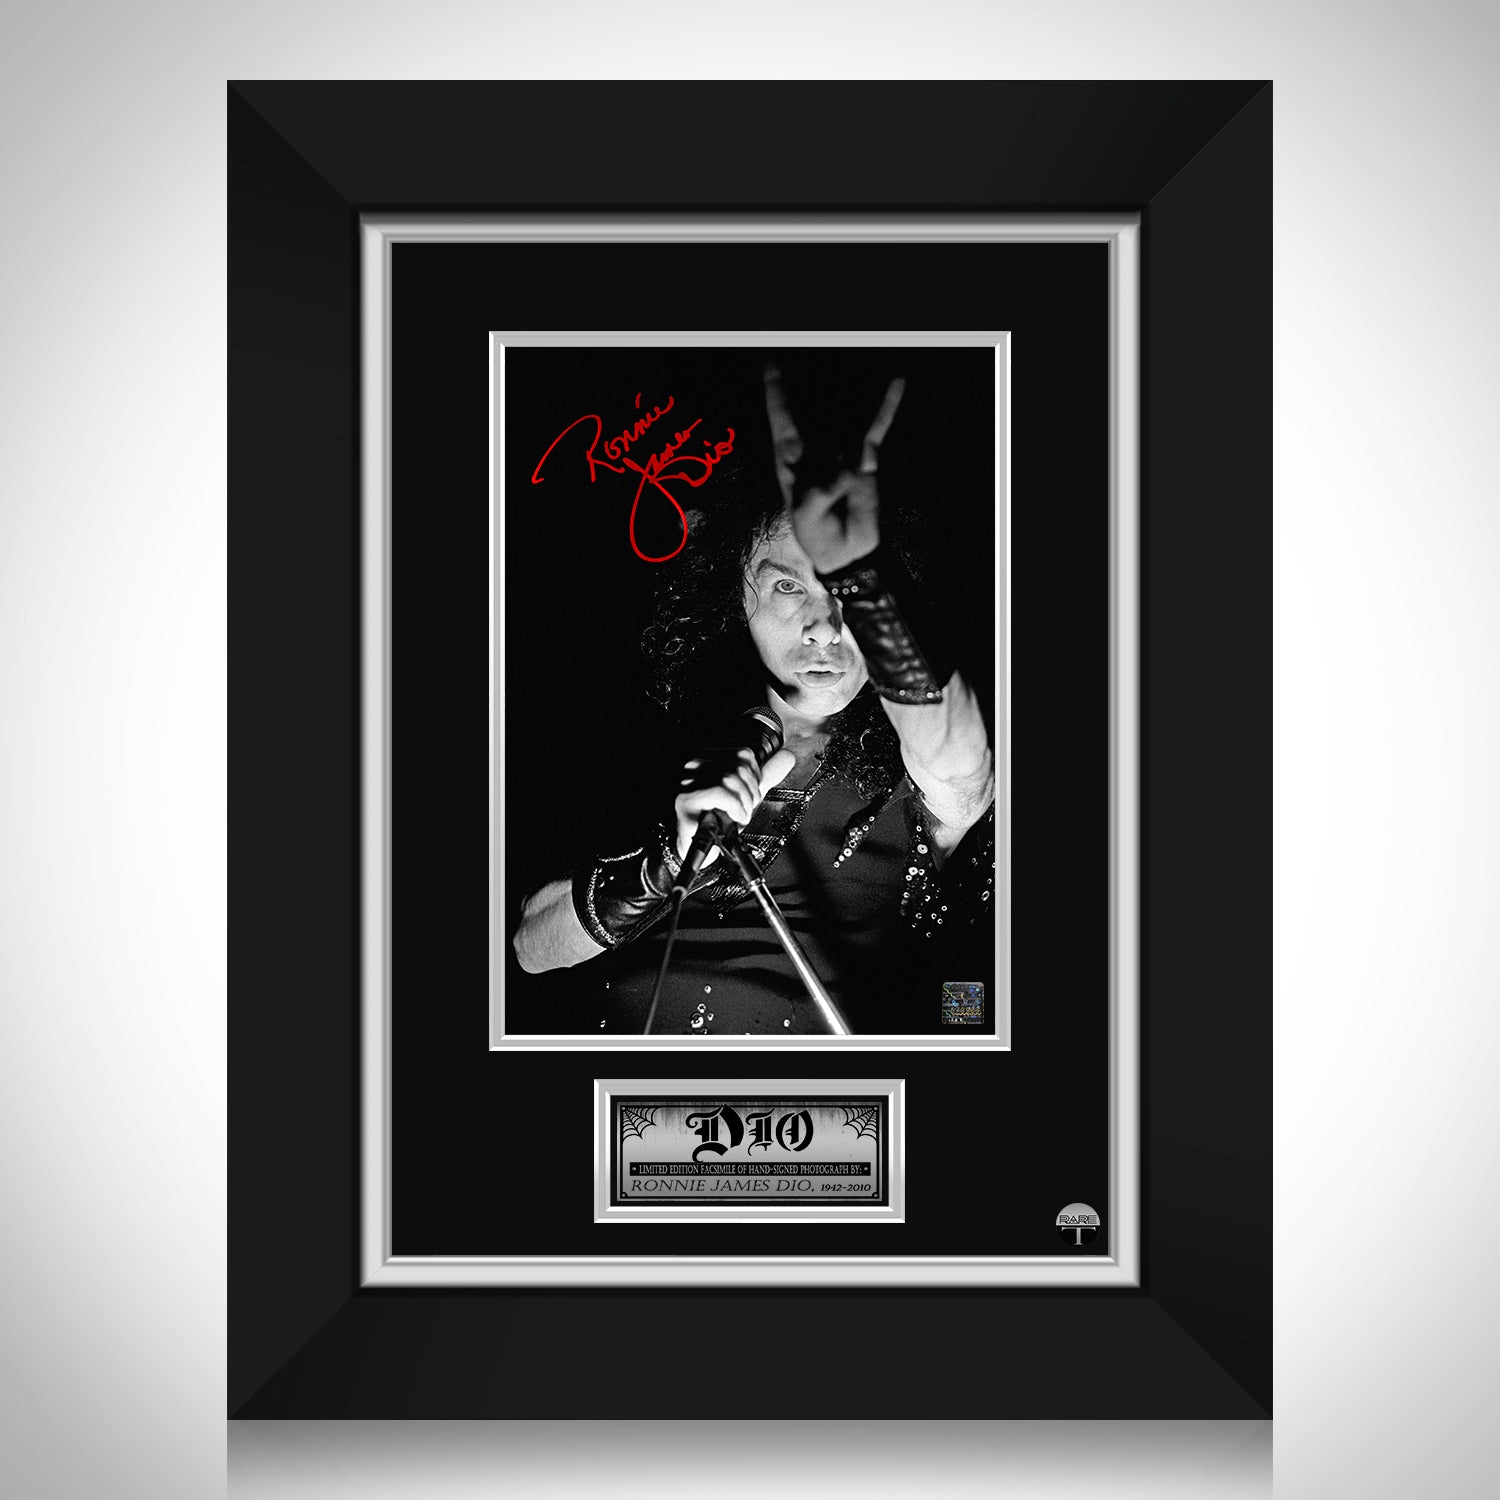 Ronnie James Dio Memorial Photo Limited Signature Edition Custom